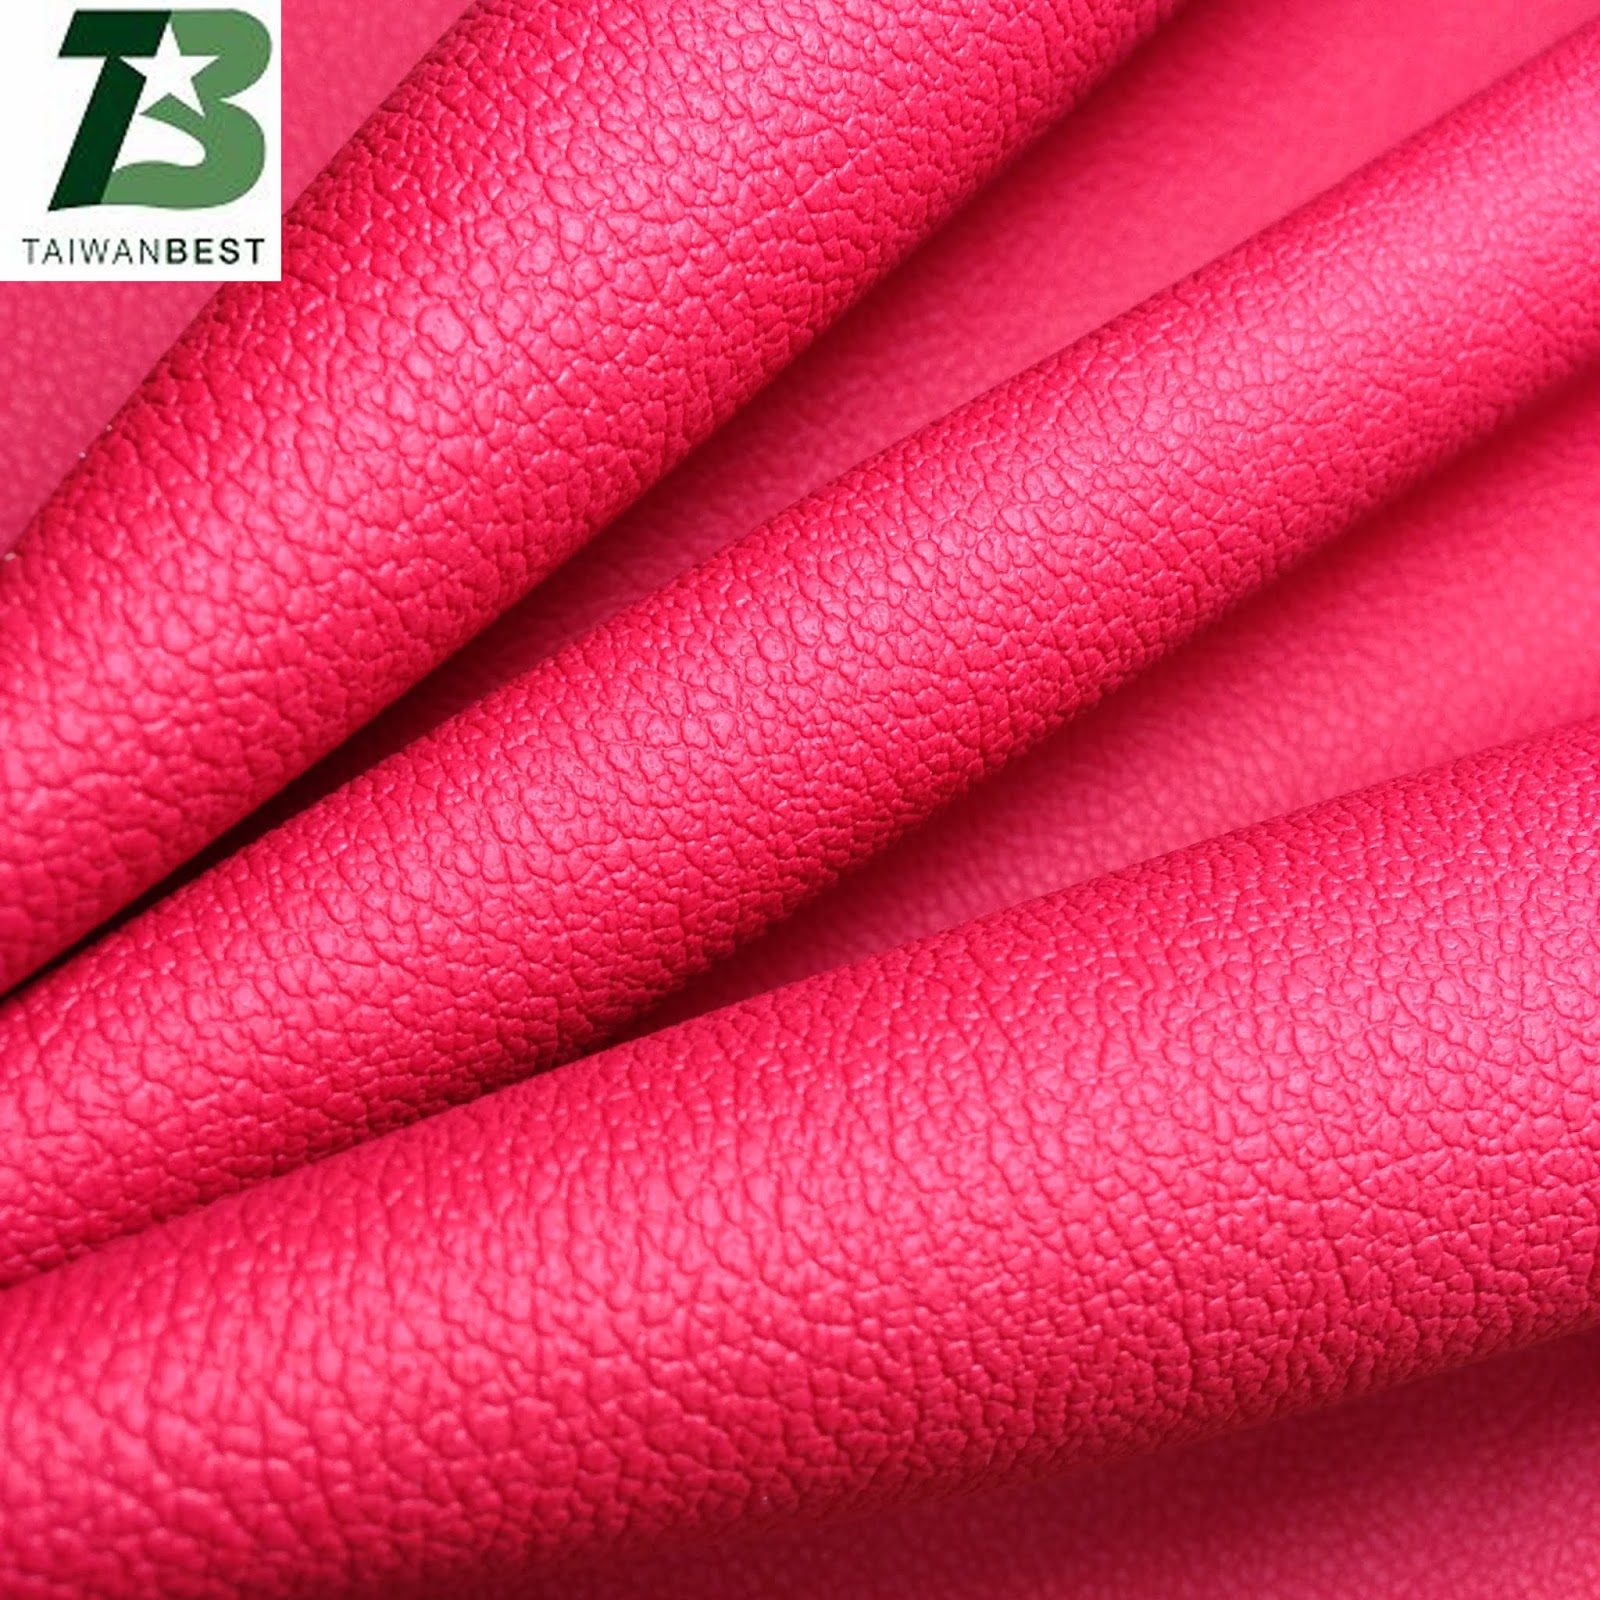 Synthetic Leather - PU Leather - FONG YEE INTERNATIONAL CO., LTD.